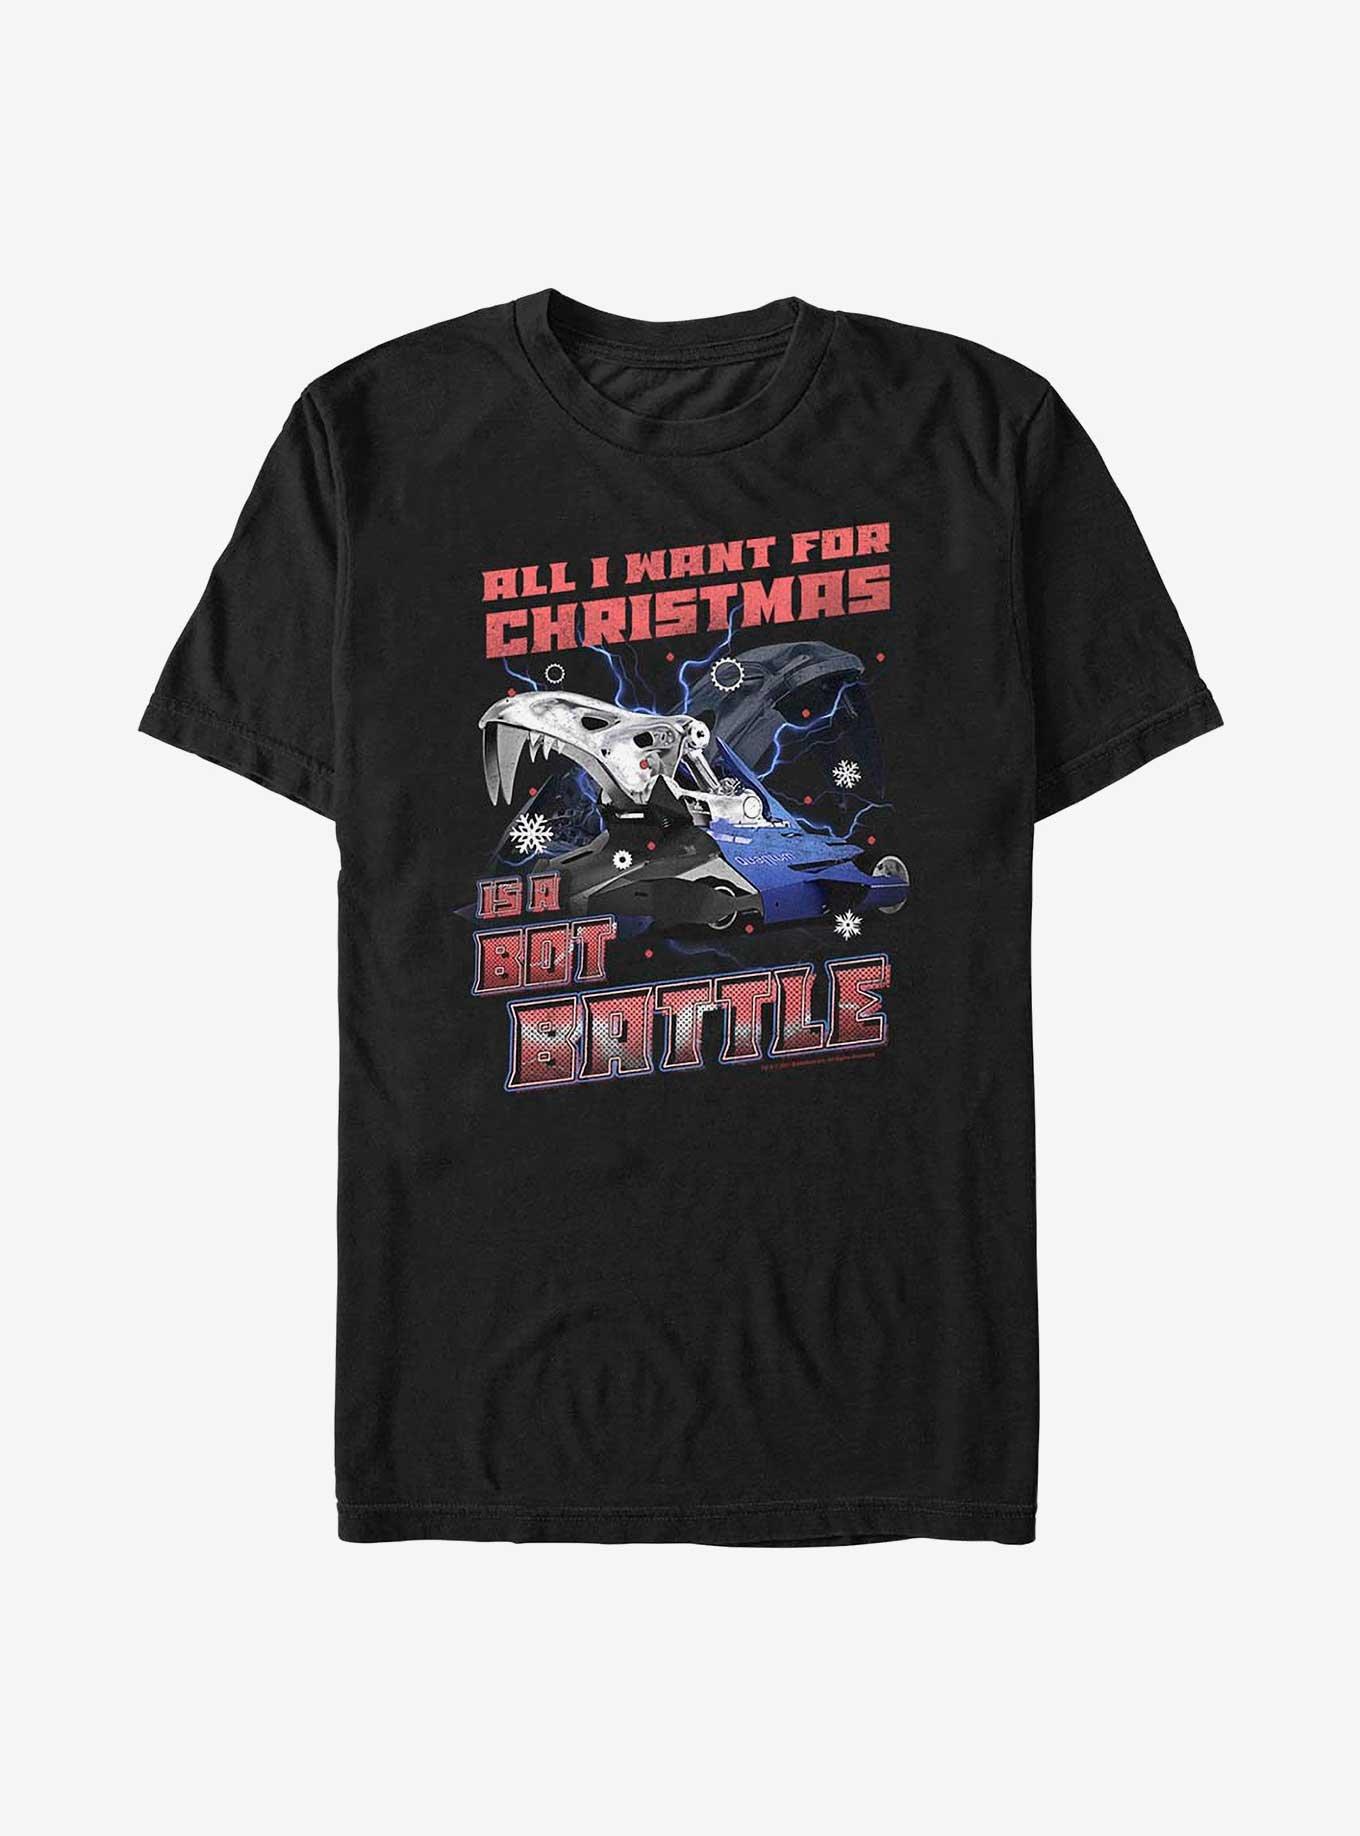 BattleBots Bot Battle T-Shirt, BLACK, hi-res